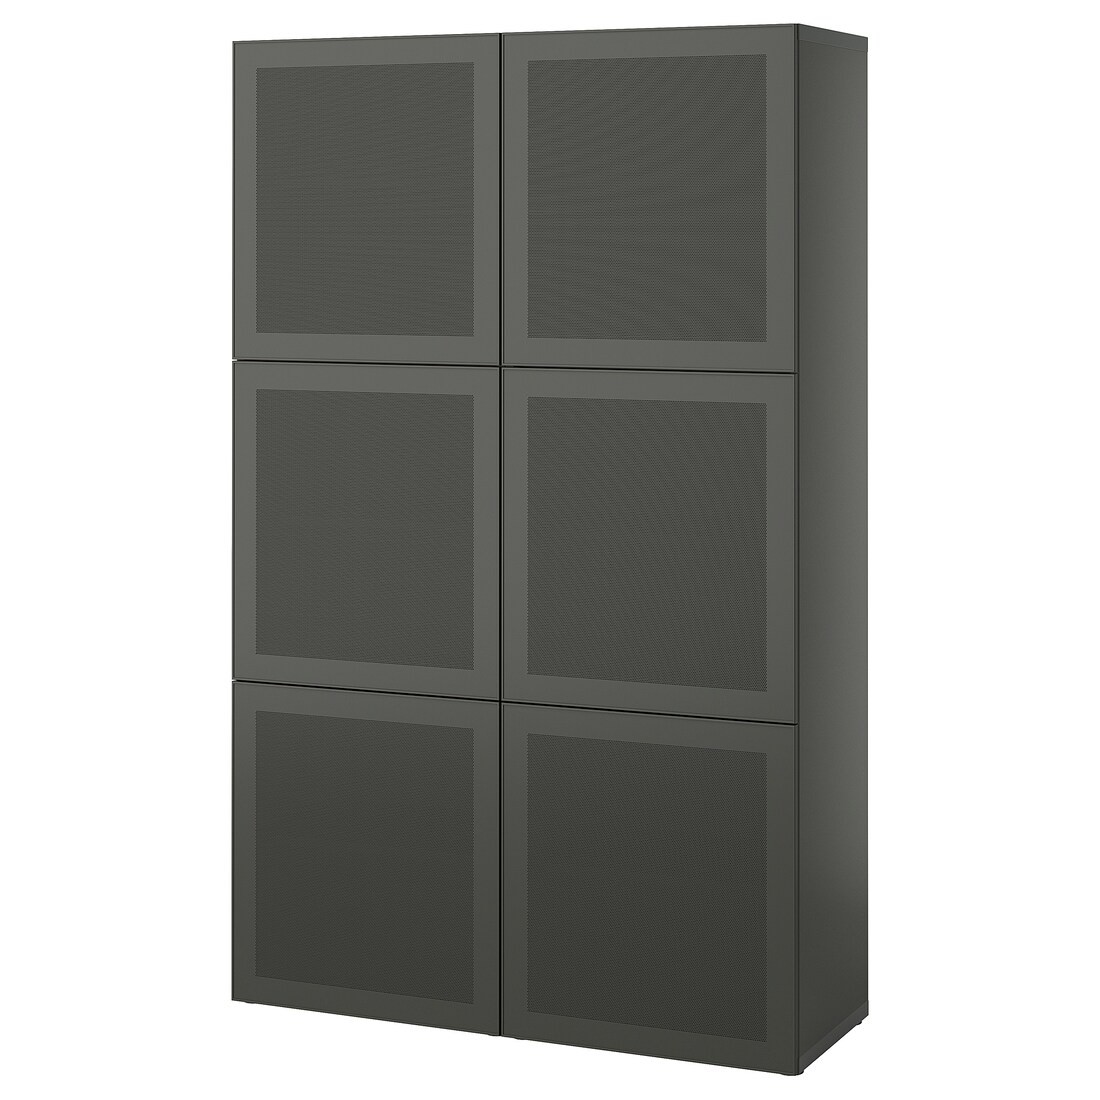 BESTÅ Комбинация для хранения с дверцами, темно-серый / Mörtviken темно-серый, 120x42x193 см